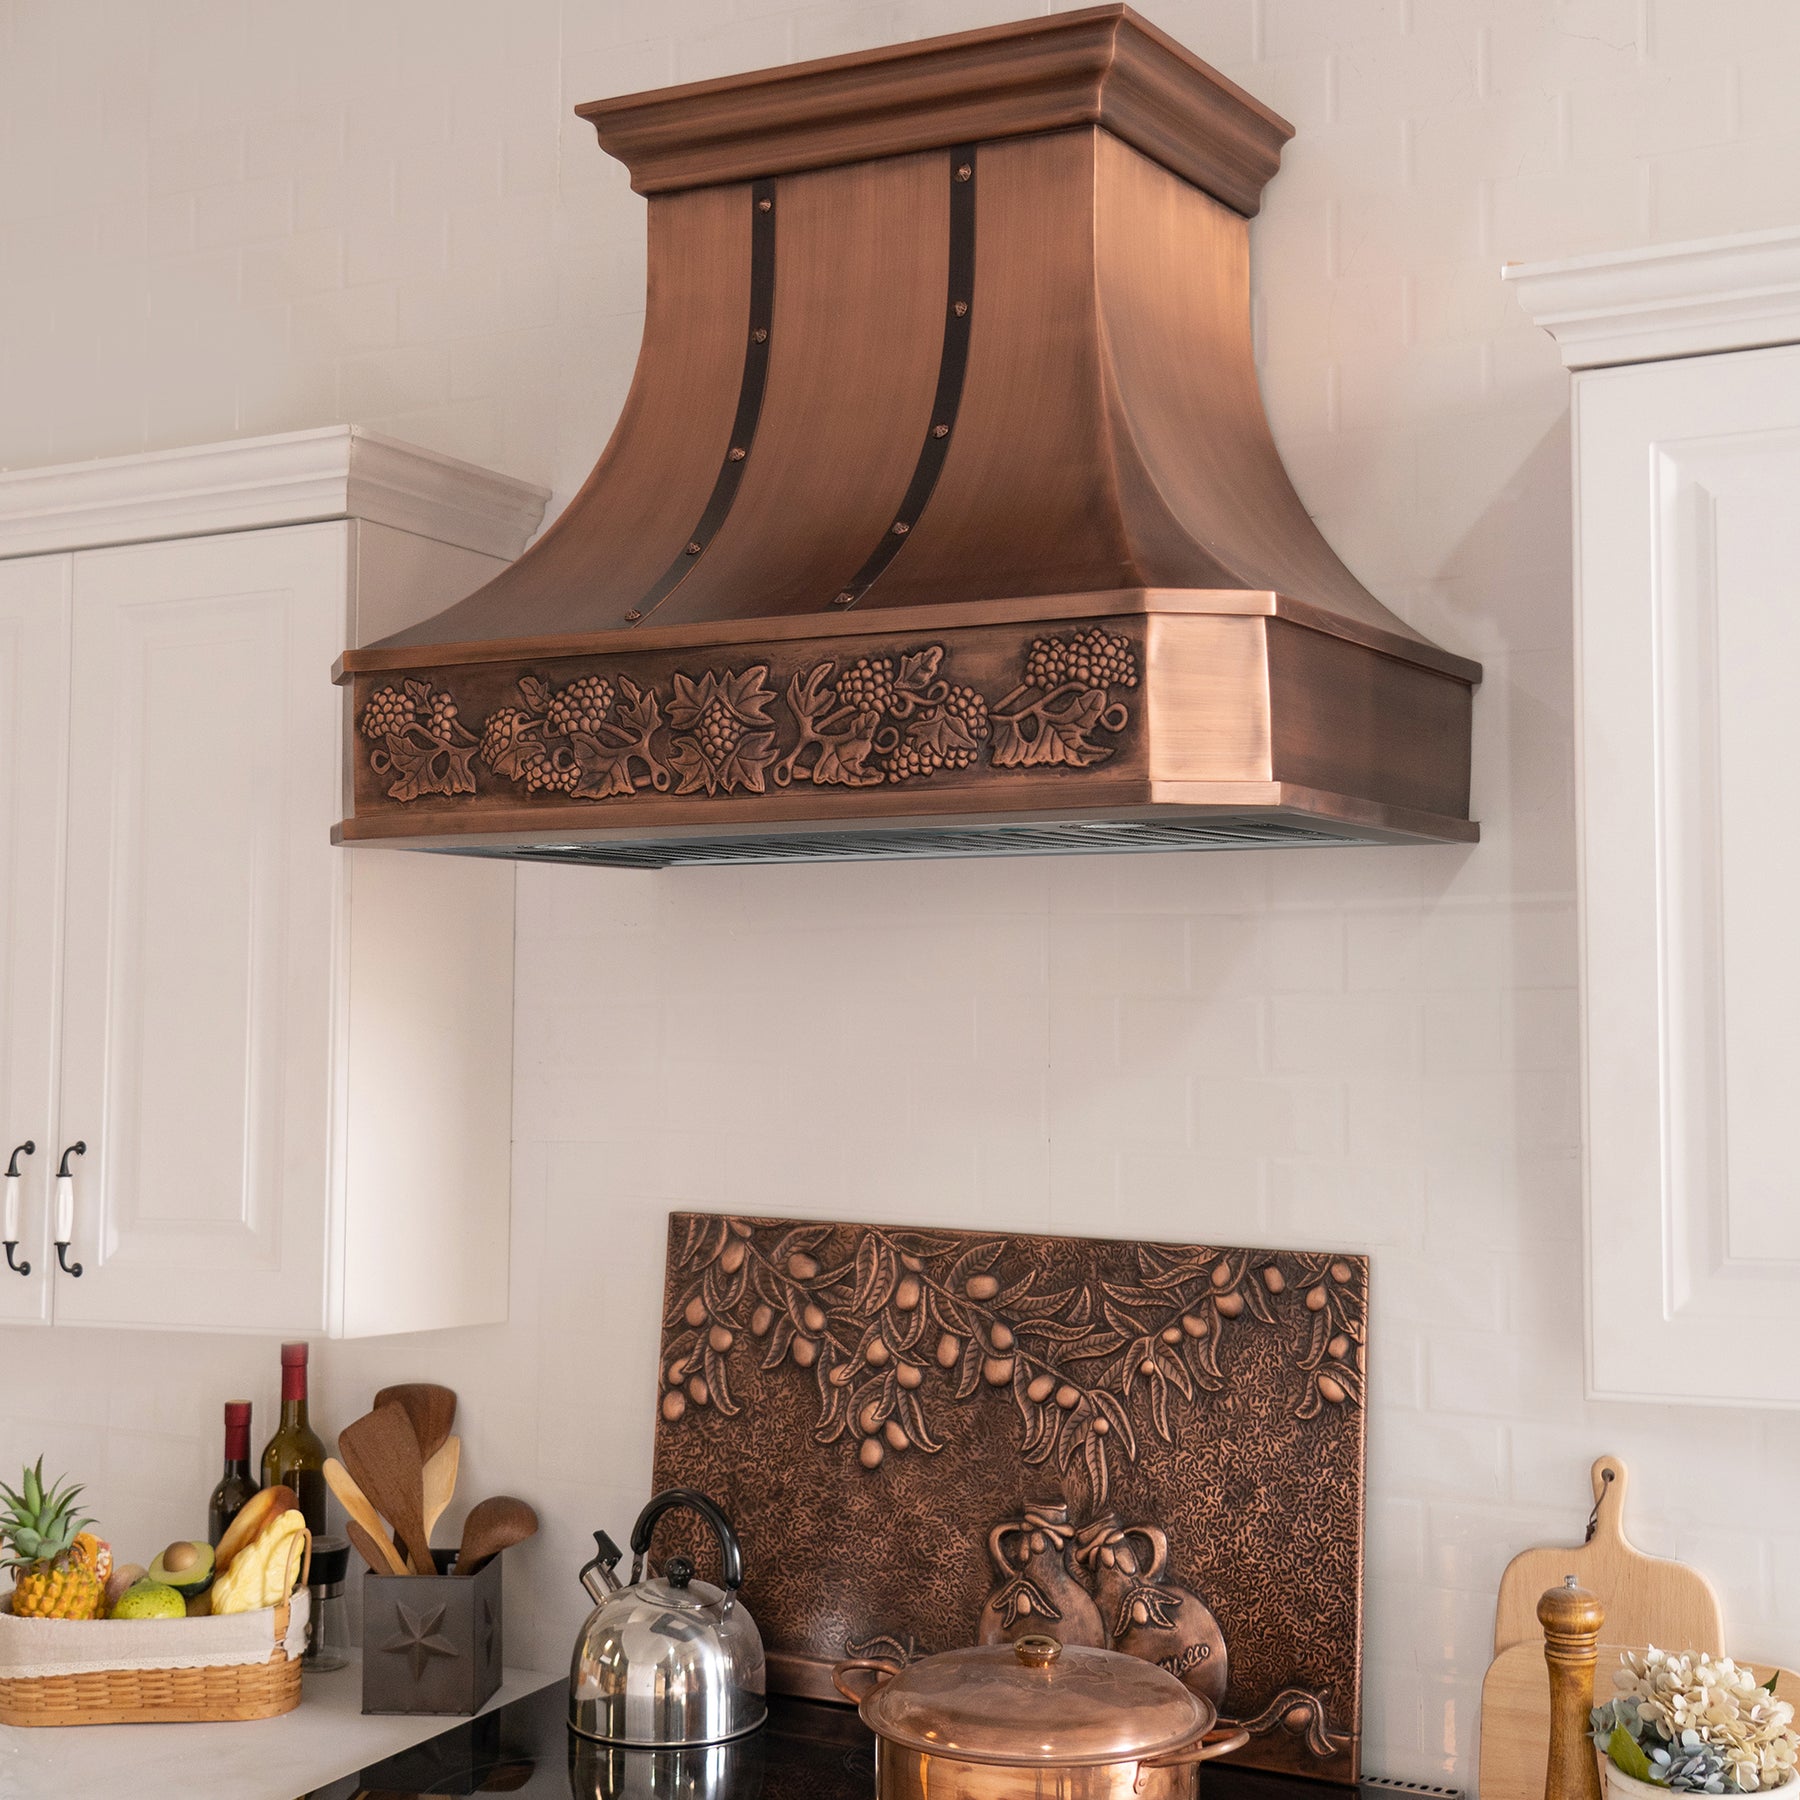 Fobest custom copper range hood with apron design